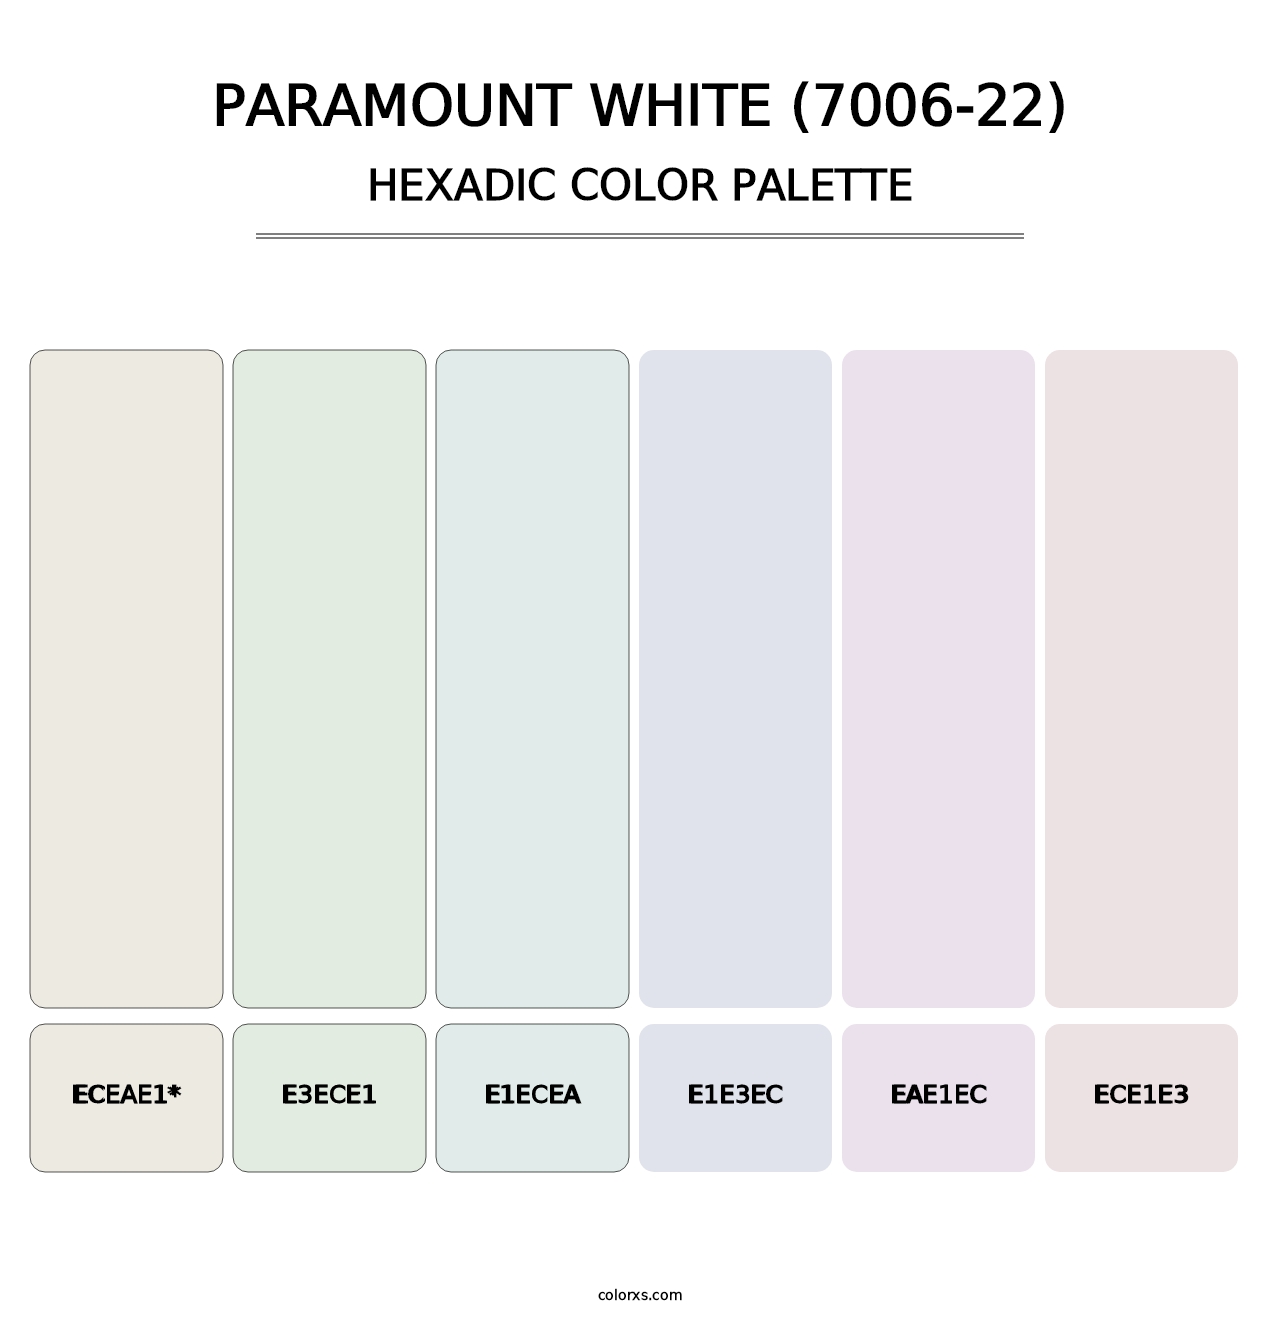 Paramount White (7006-22) - Hexadic Color Palette